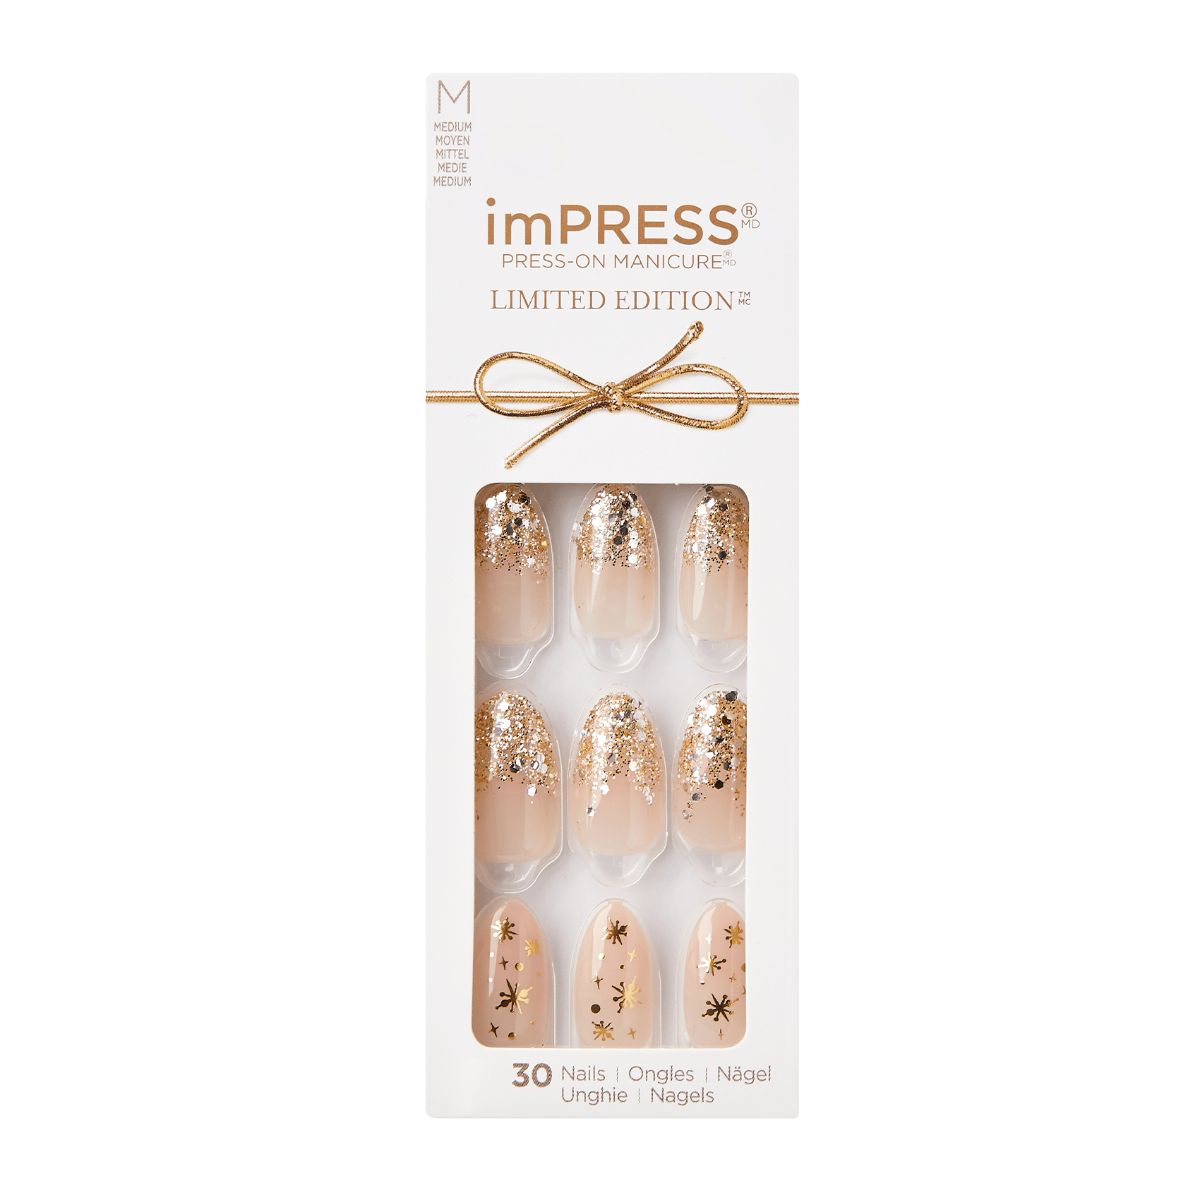 imPRESS Limited-Edition Holiday Press-On Nails | KISS, imPRESS, JOAH